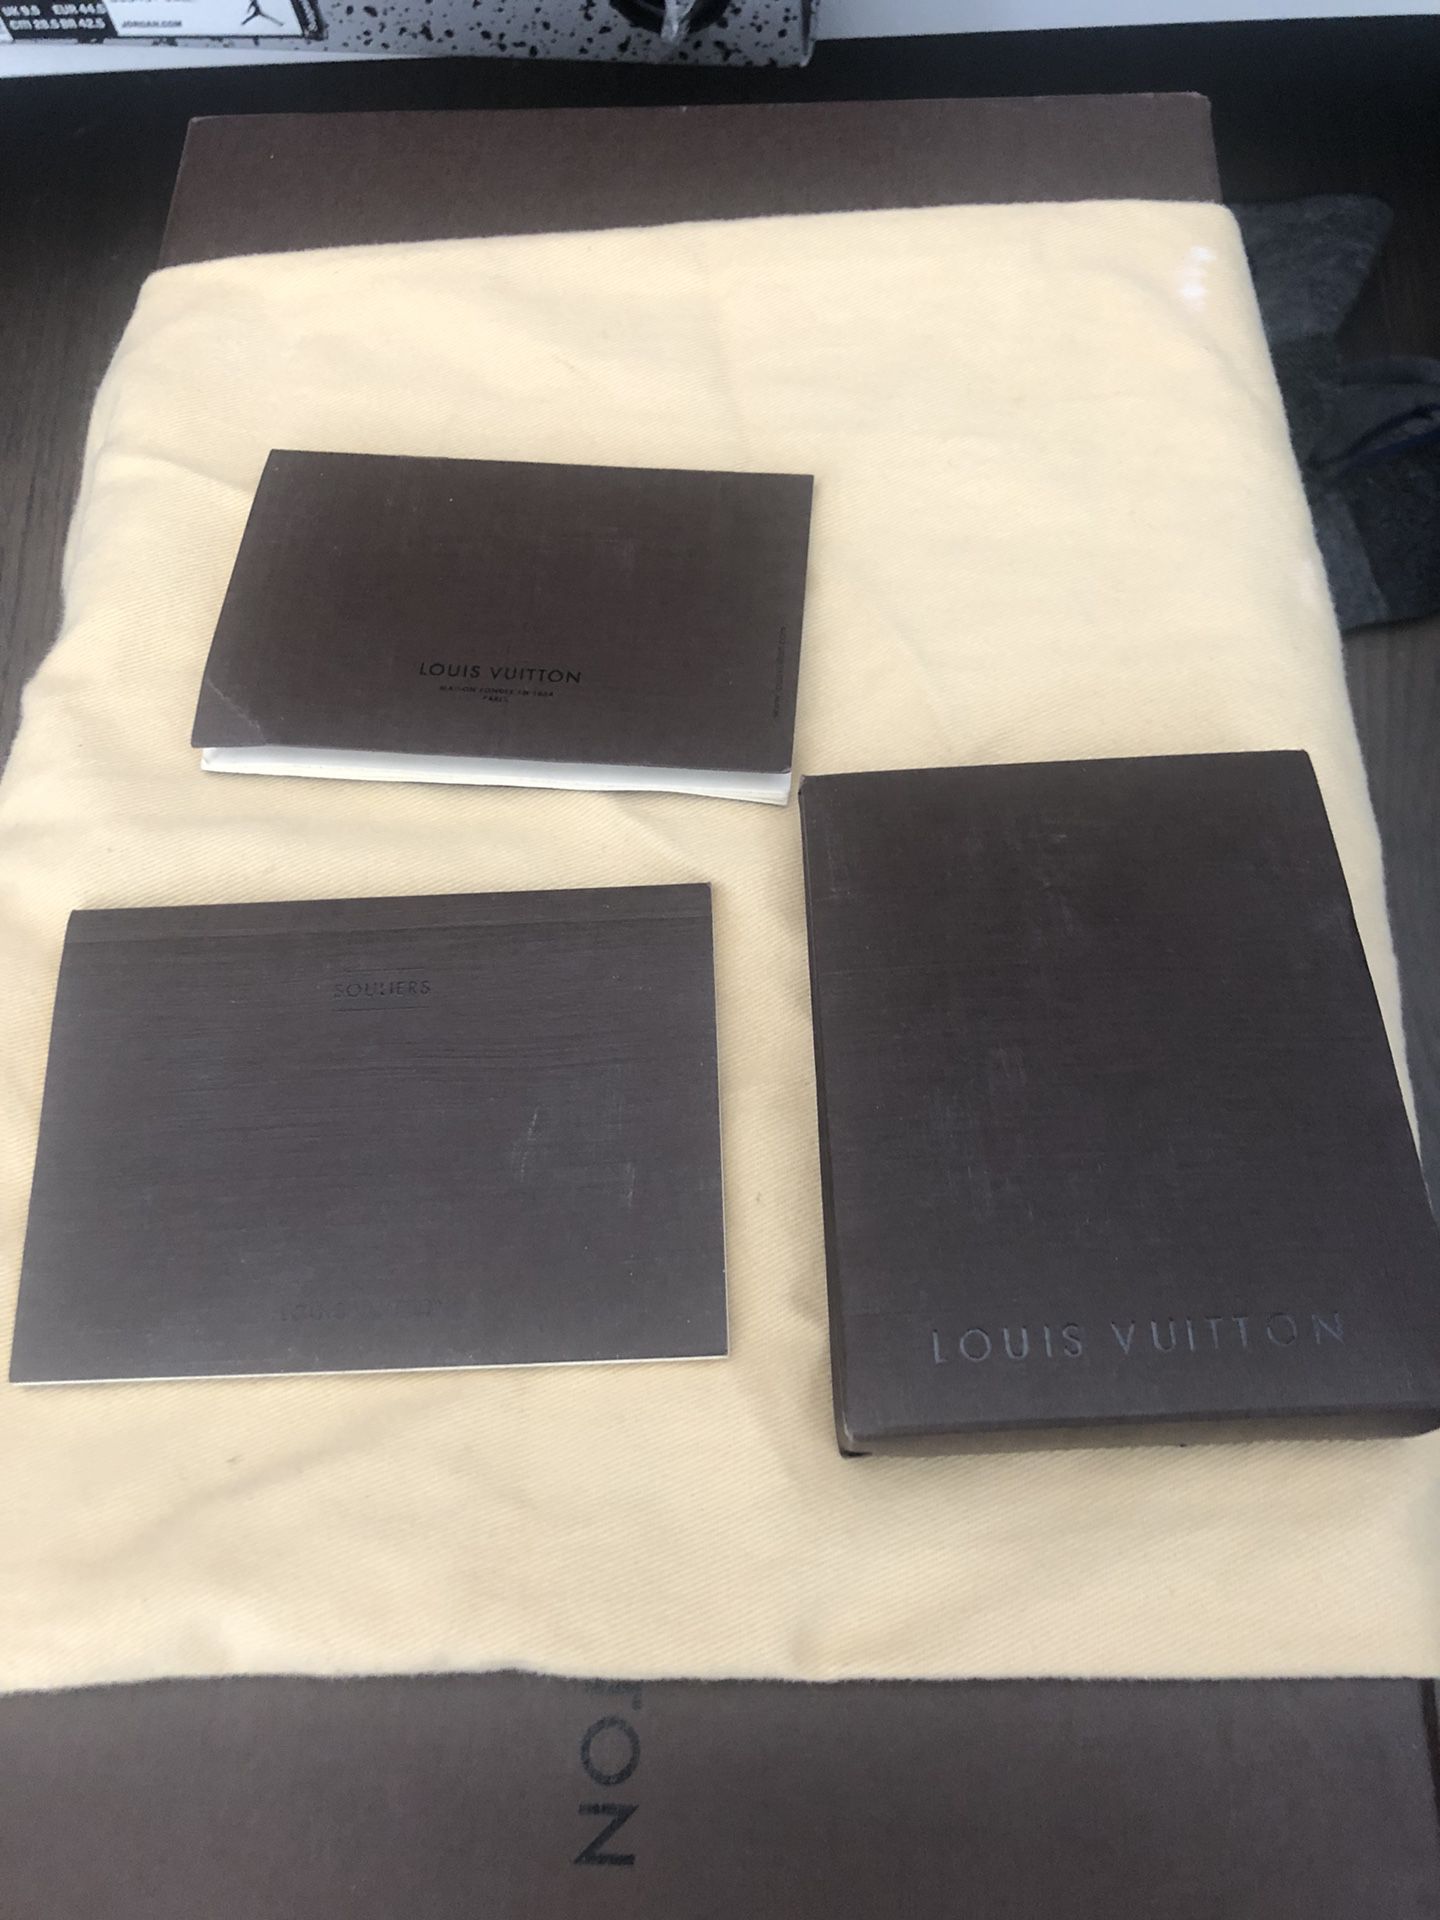 SLUM LTD - Louis Vuitton x Kanye West - Don Patchwork Condition : Used Size  : LV7/9US Desc : Original Box , Dust Bag Price : 129000฿ Tel : 026581760  Line : SLUMLTD #louisvuittonxkanyewest #slumltd